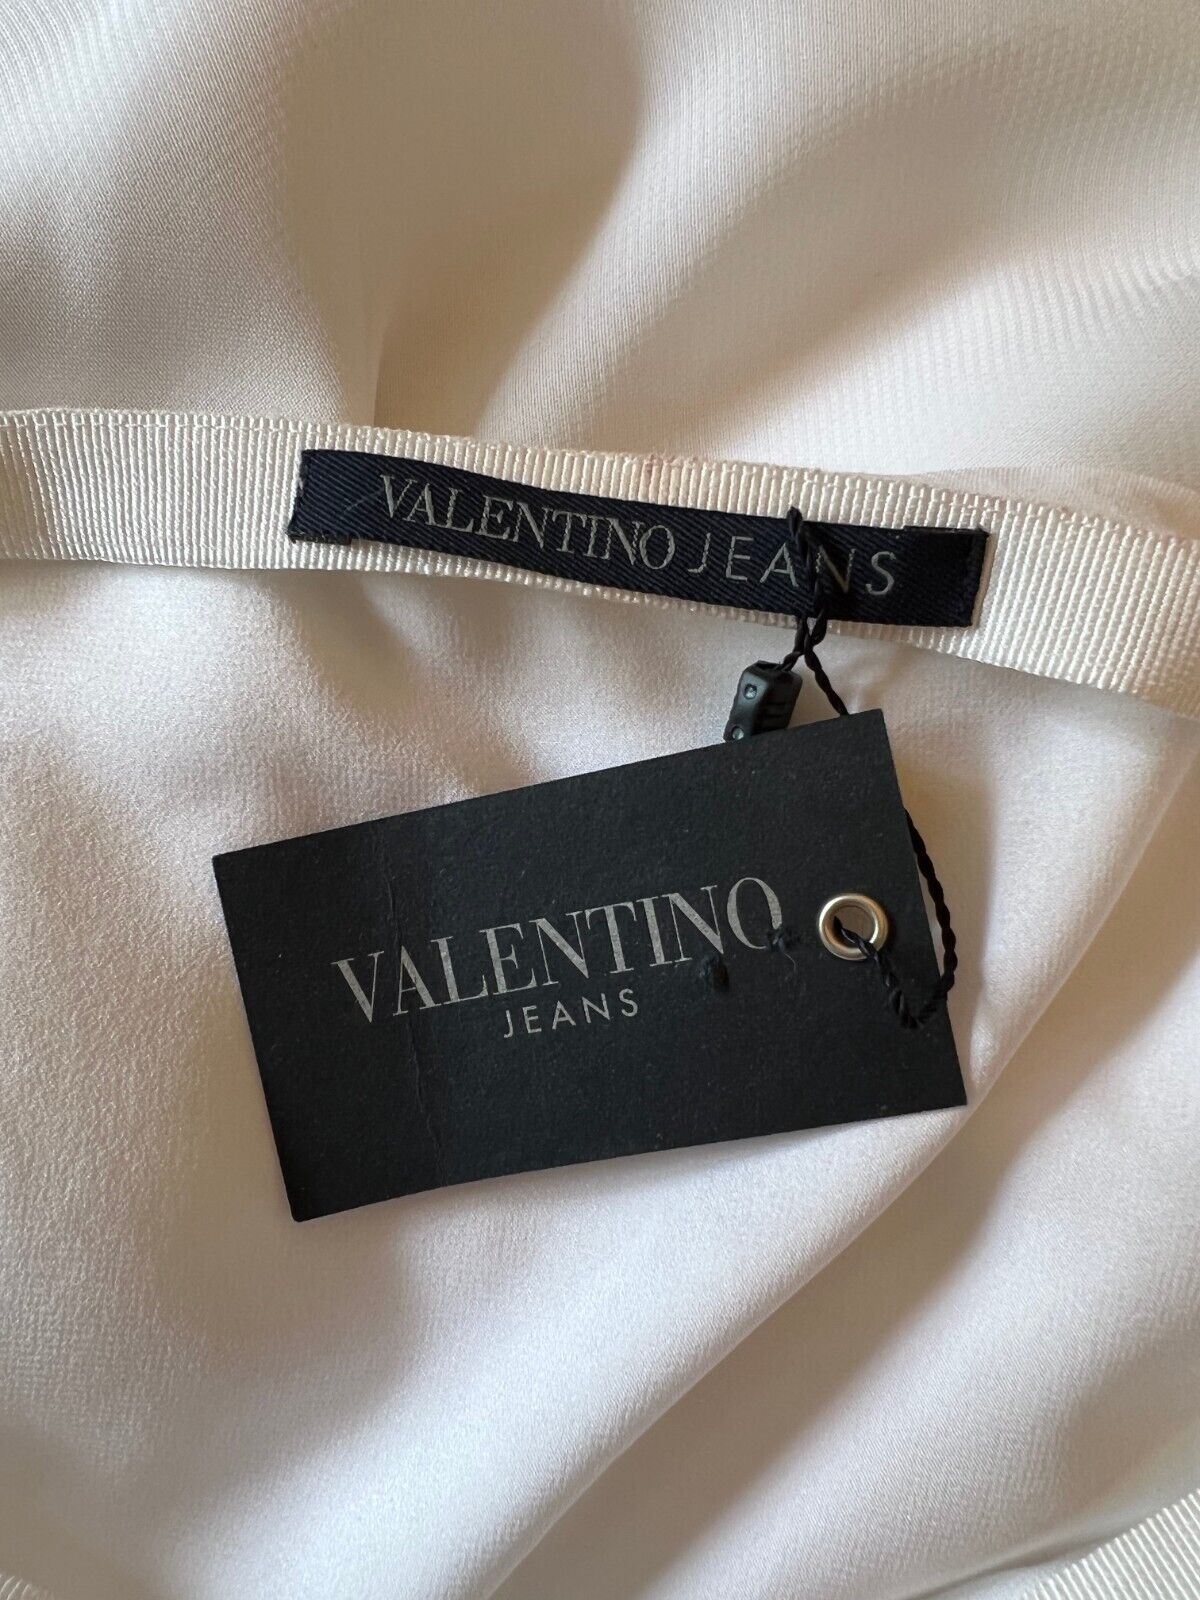 Valentino Jeans Women's White & Black Floral Chiffon Skirt UK 12 EU 40 US 8 IT 44 Timeless Fashions